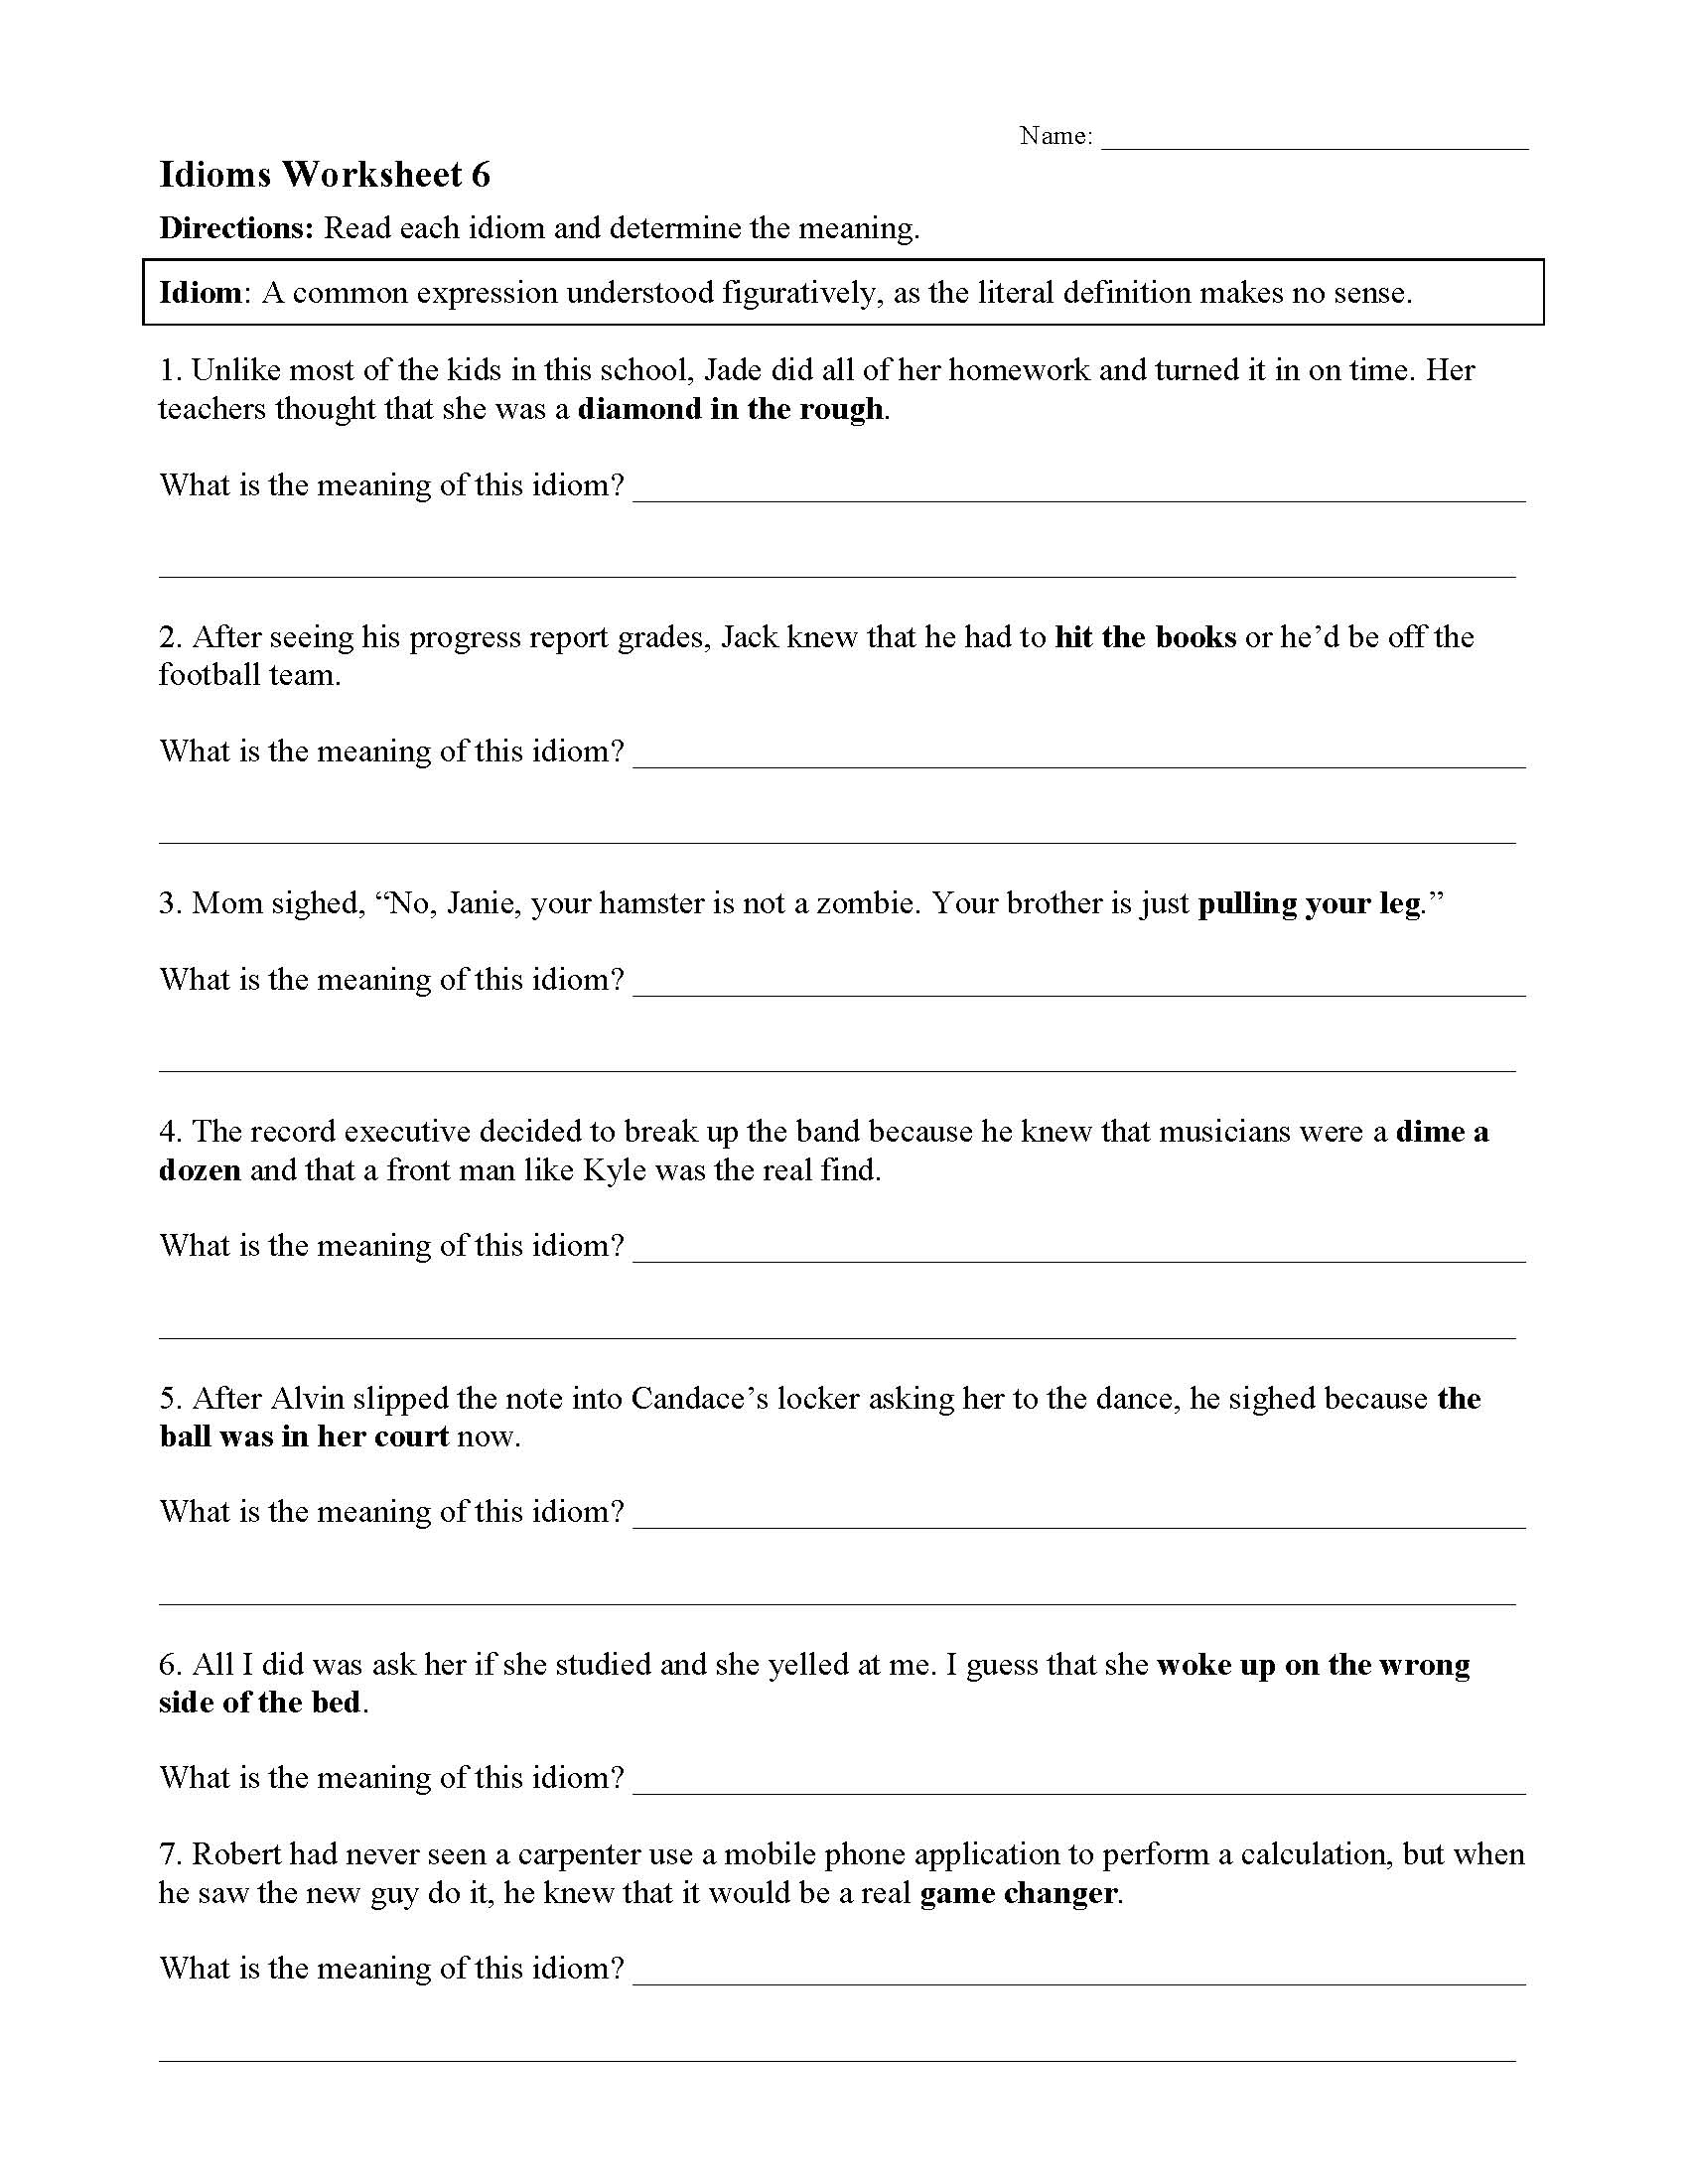 idiom-worksheets-tests-figurative-language-activities